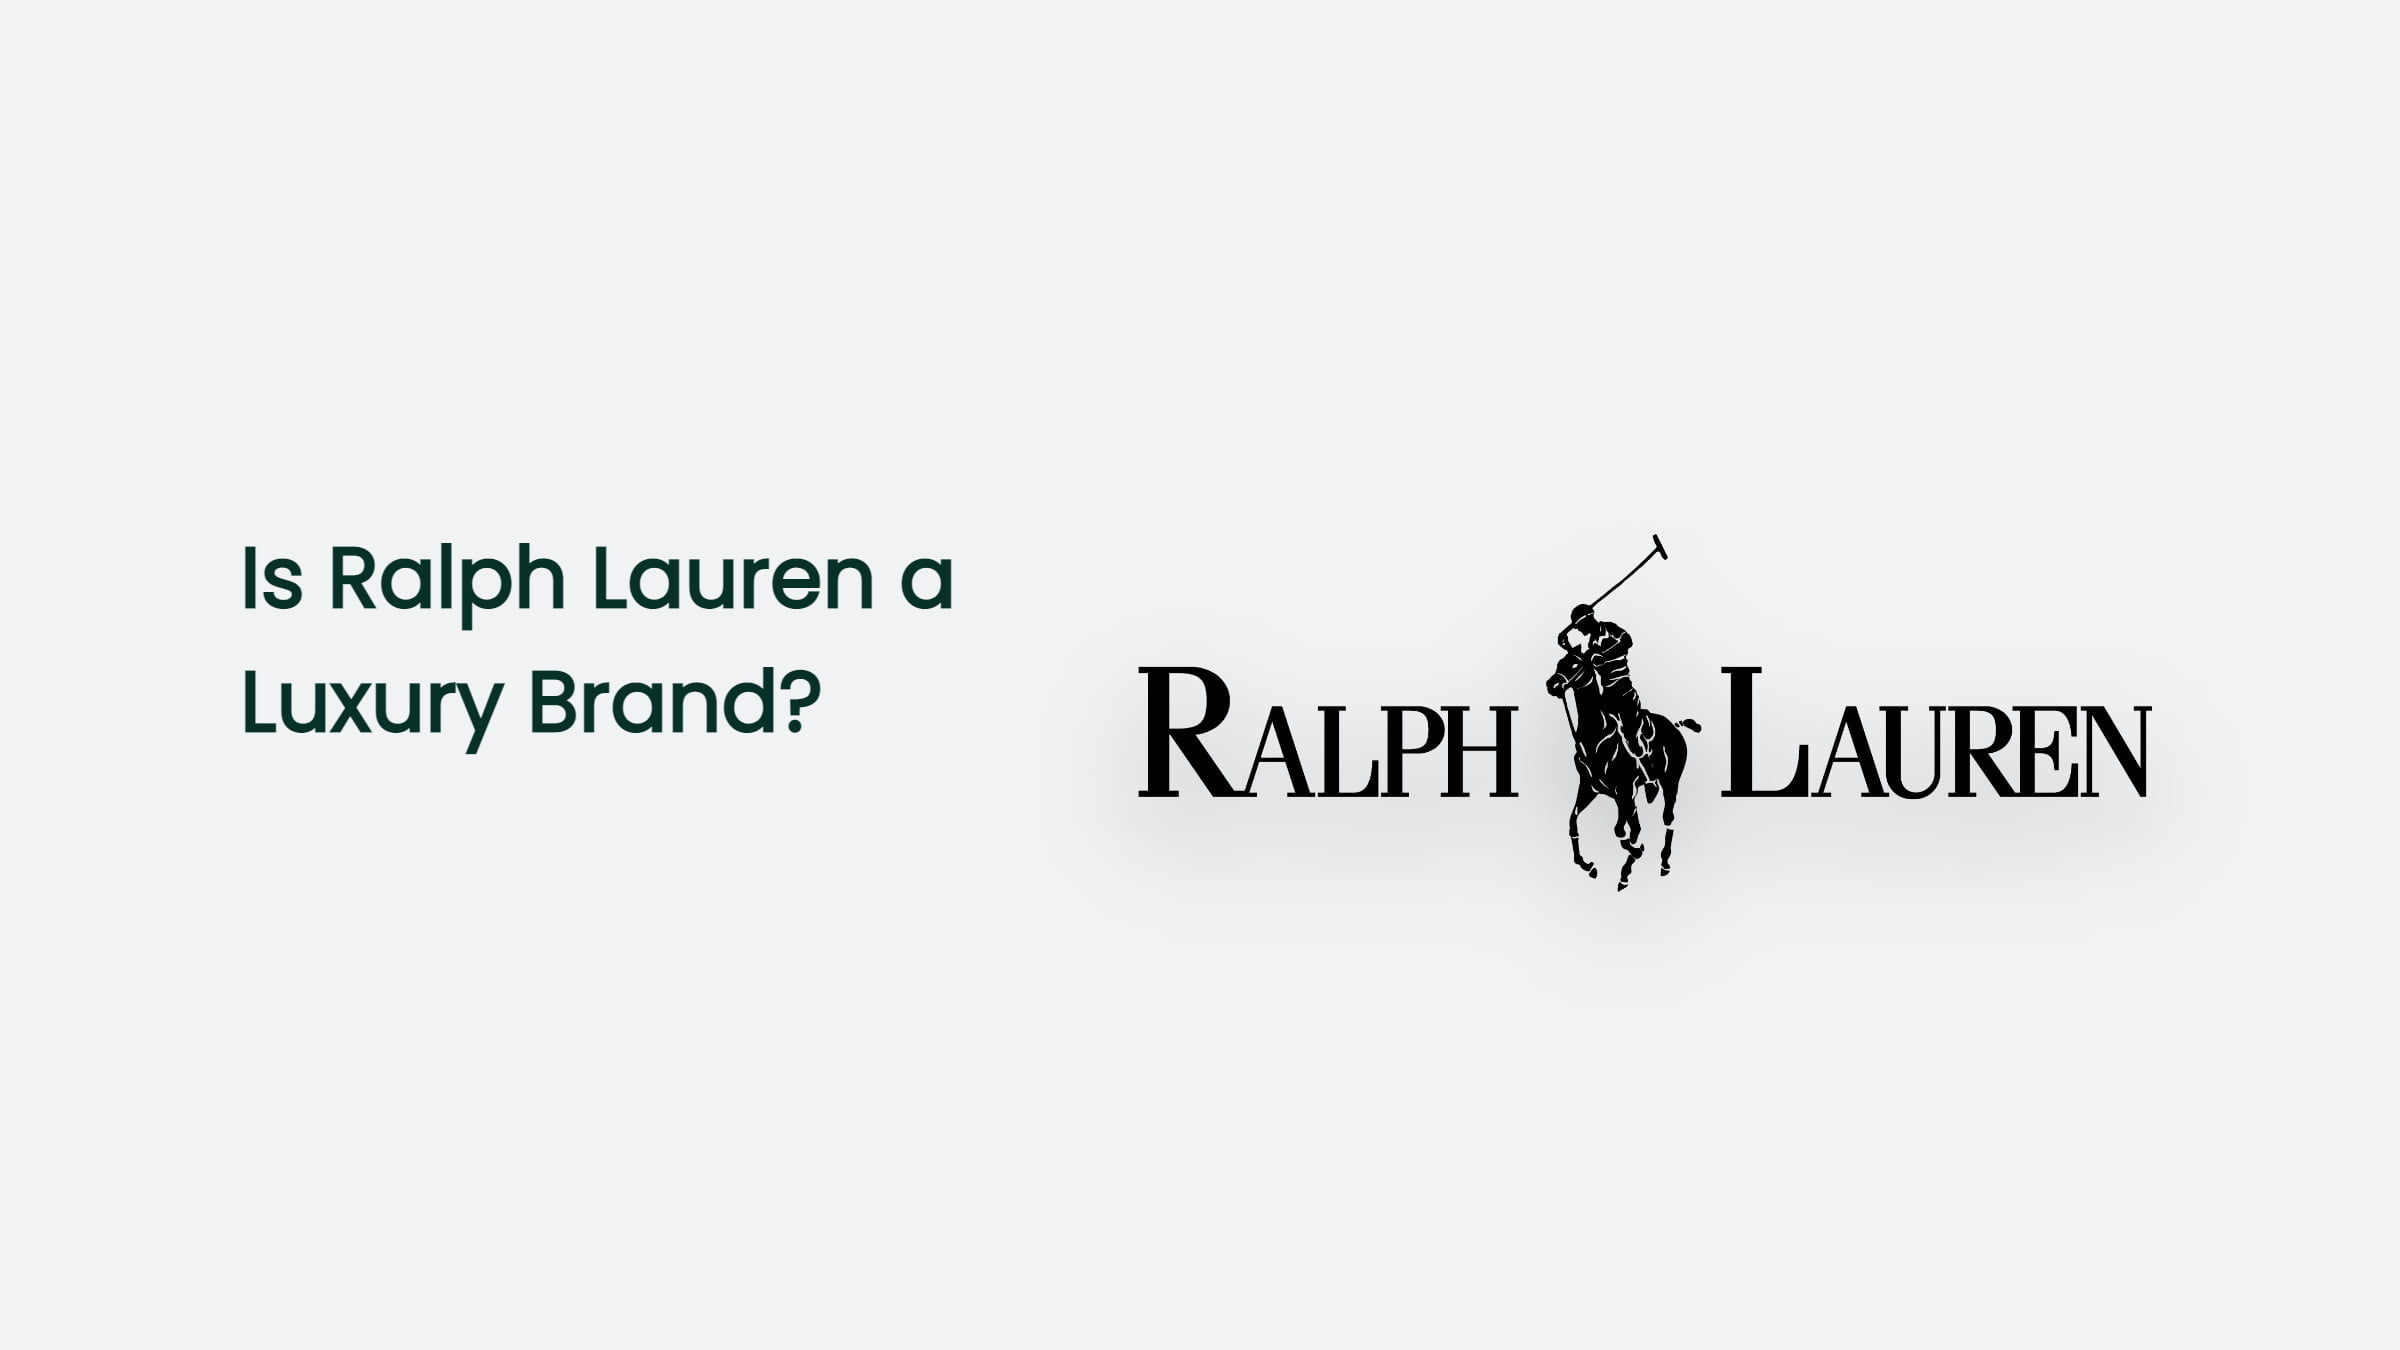 Is Ralph a luxury brand?